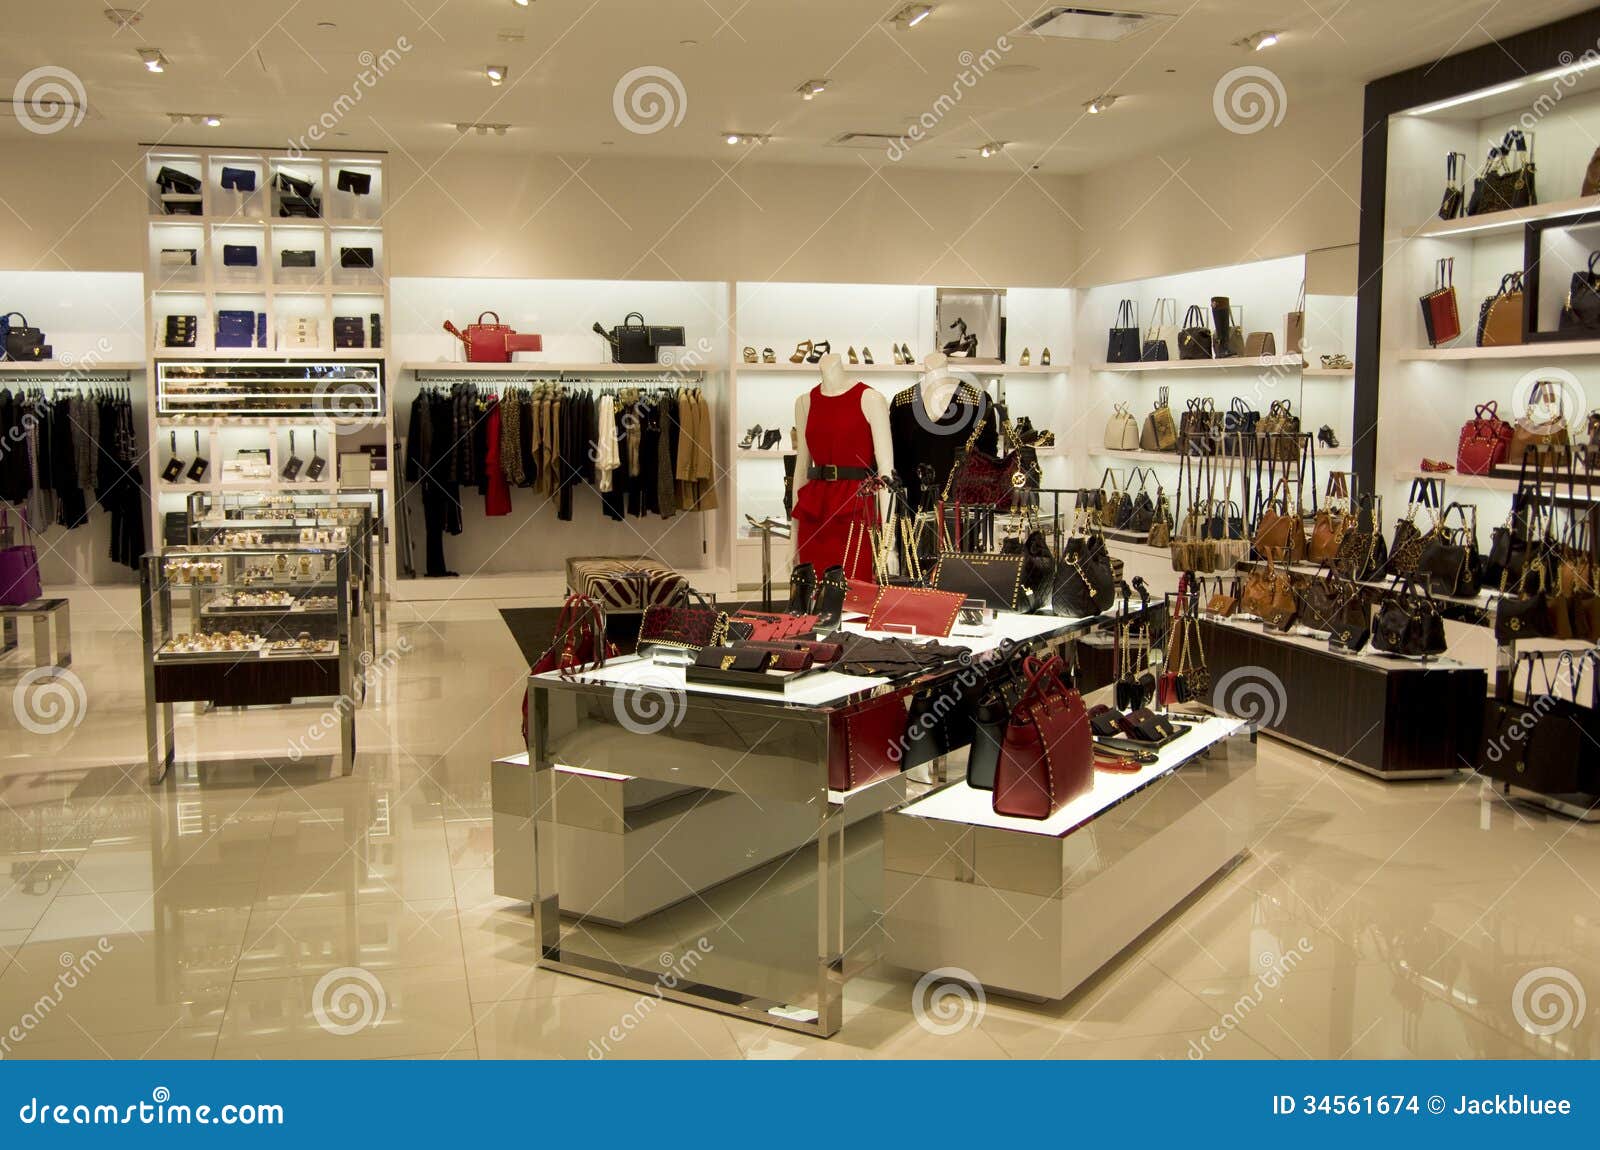 Handbag Purse Store Editorial Stock Image - Image: 34561674